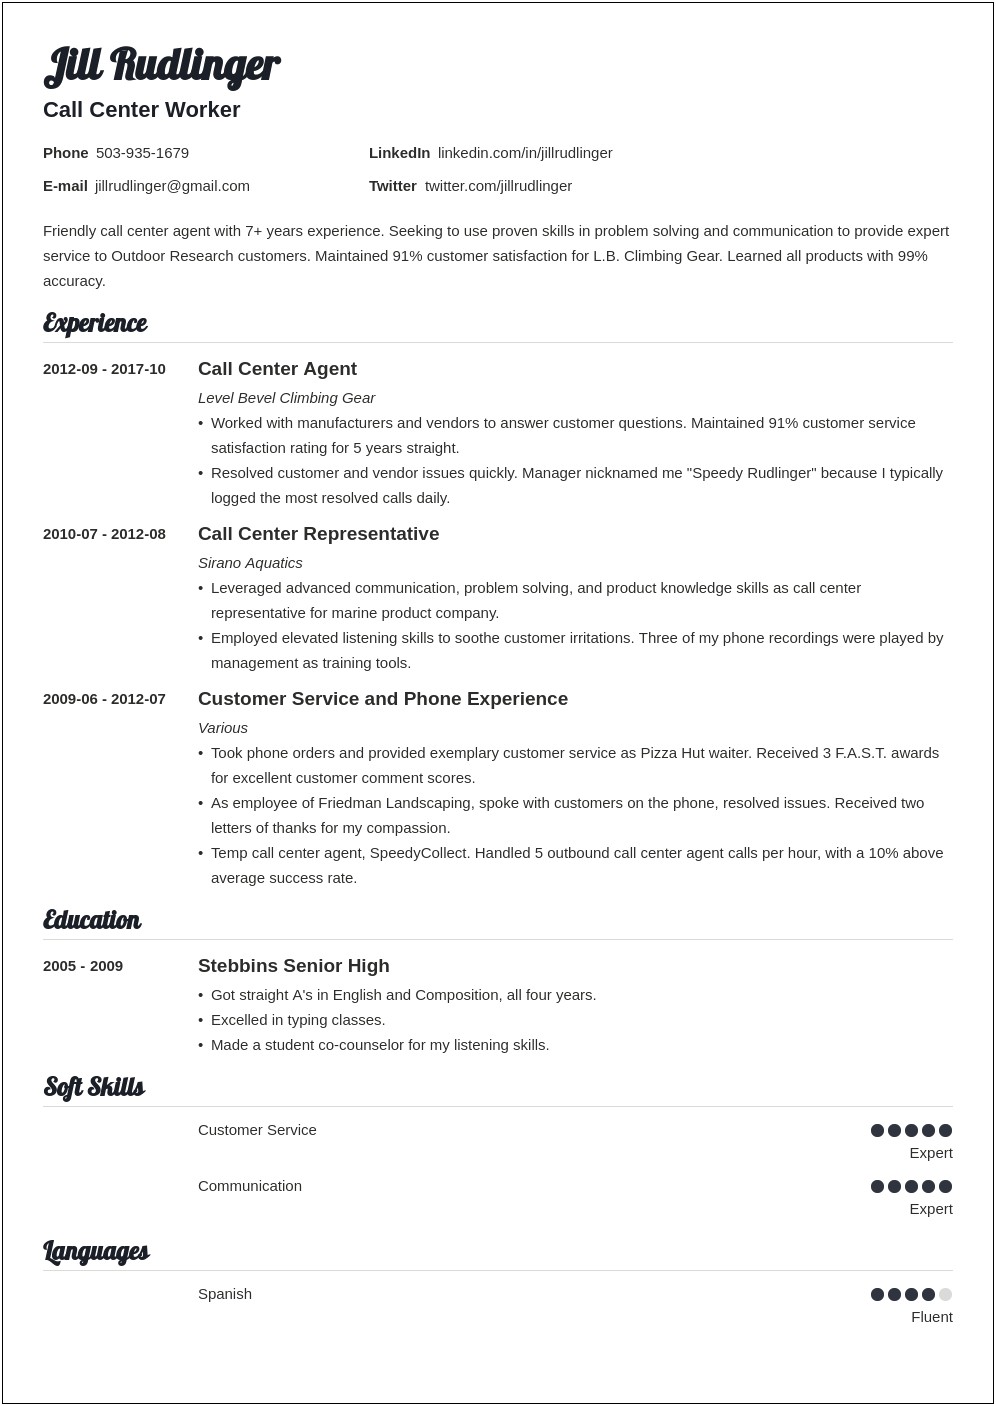 Resume Job Description Call Center